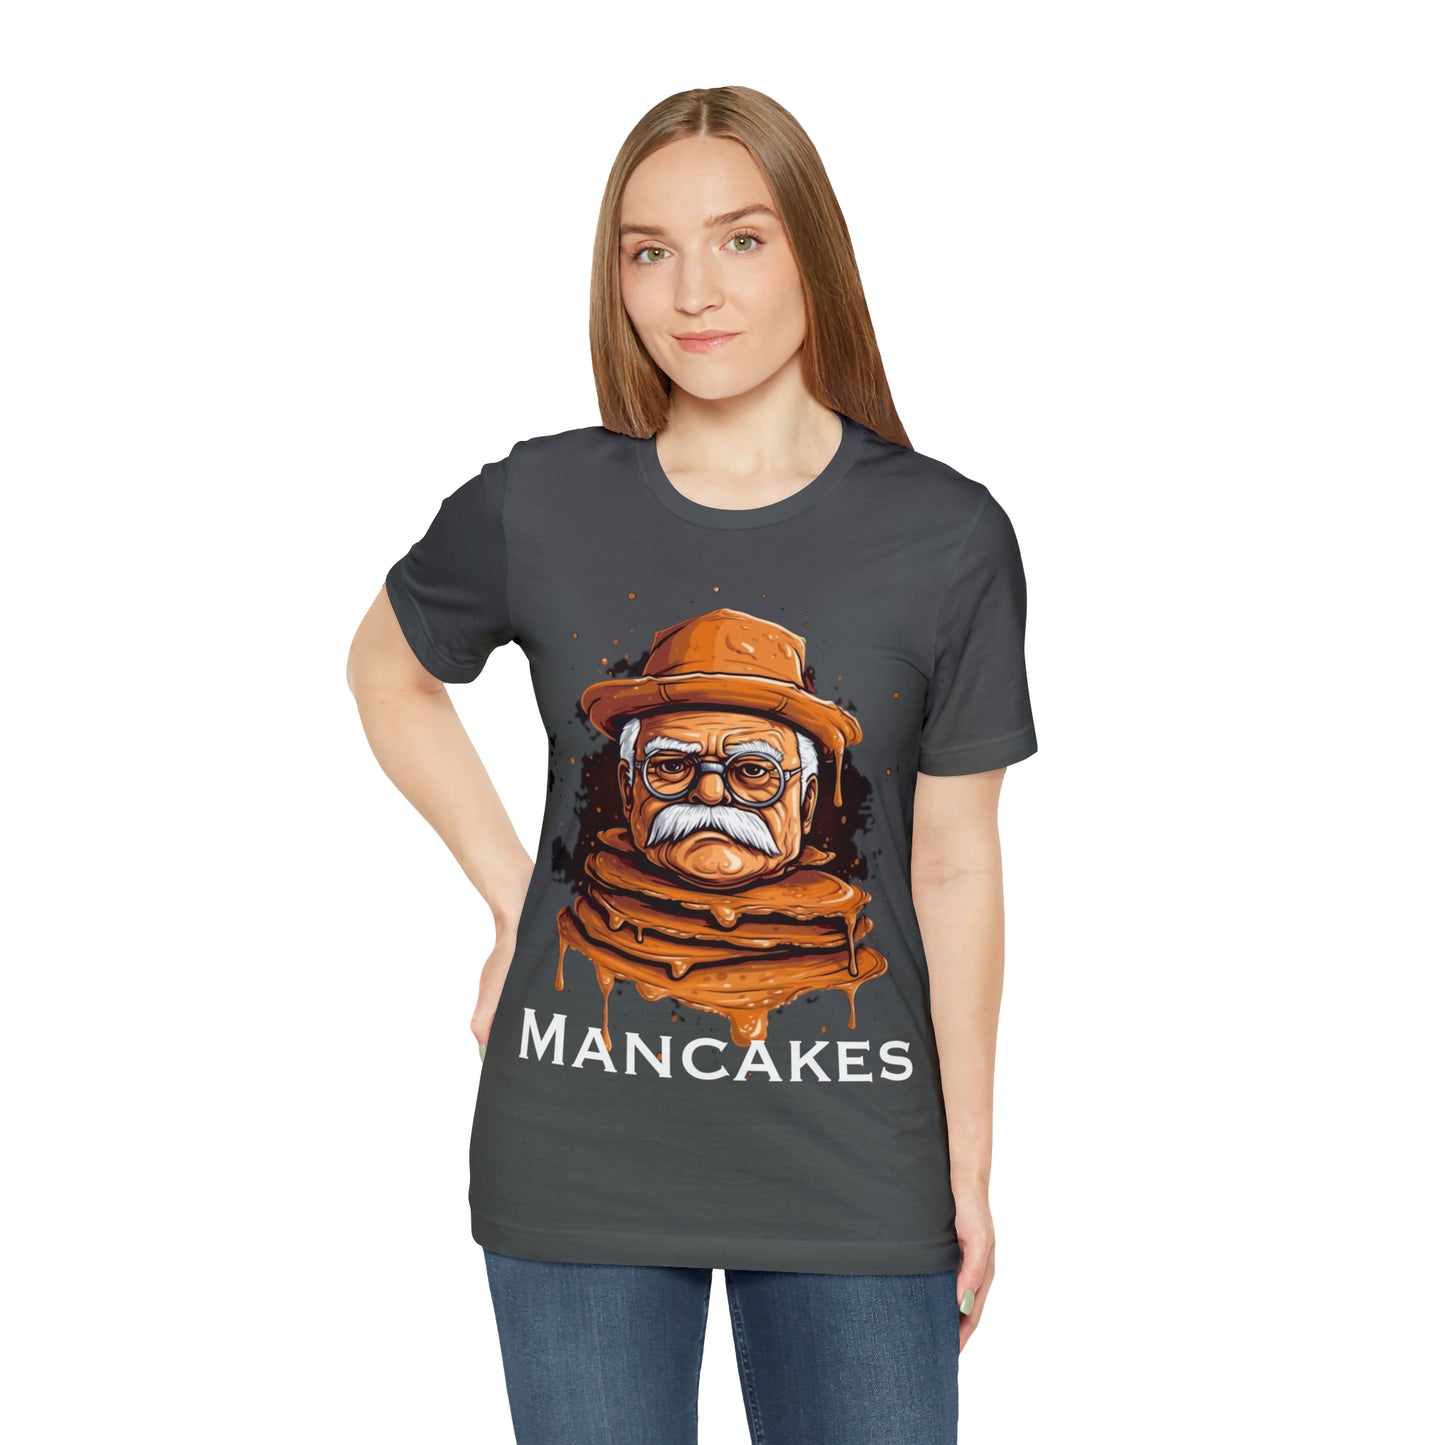 Mancakes (Large Print), Unisex Short Sleeve Tee